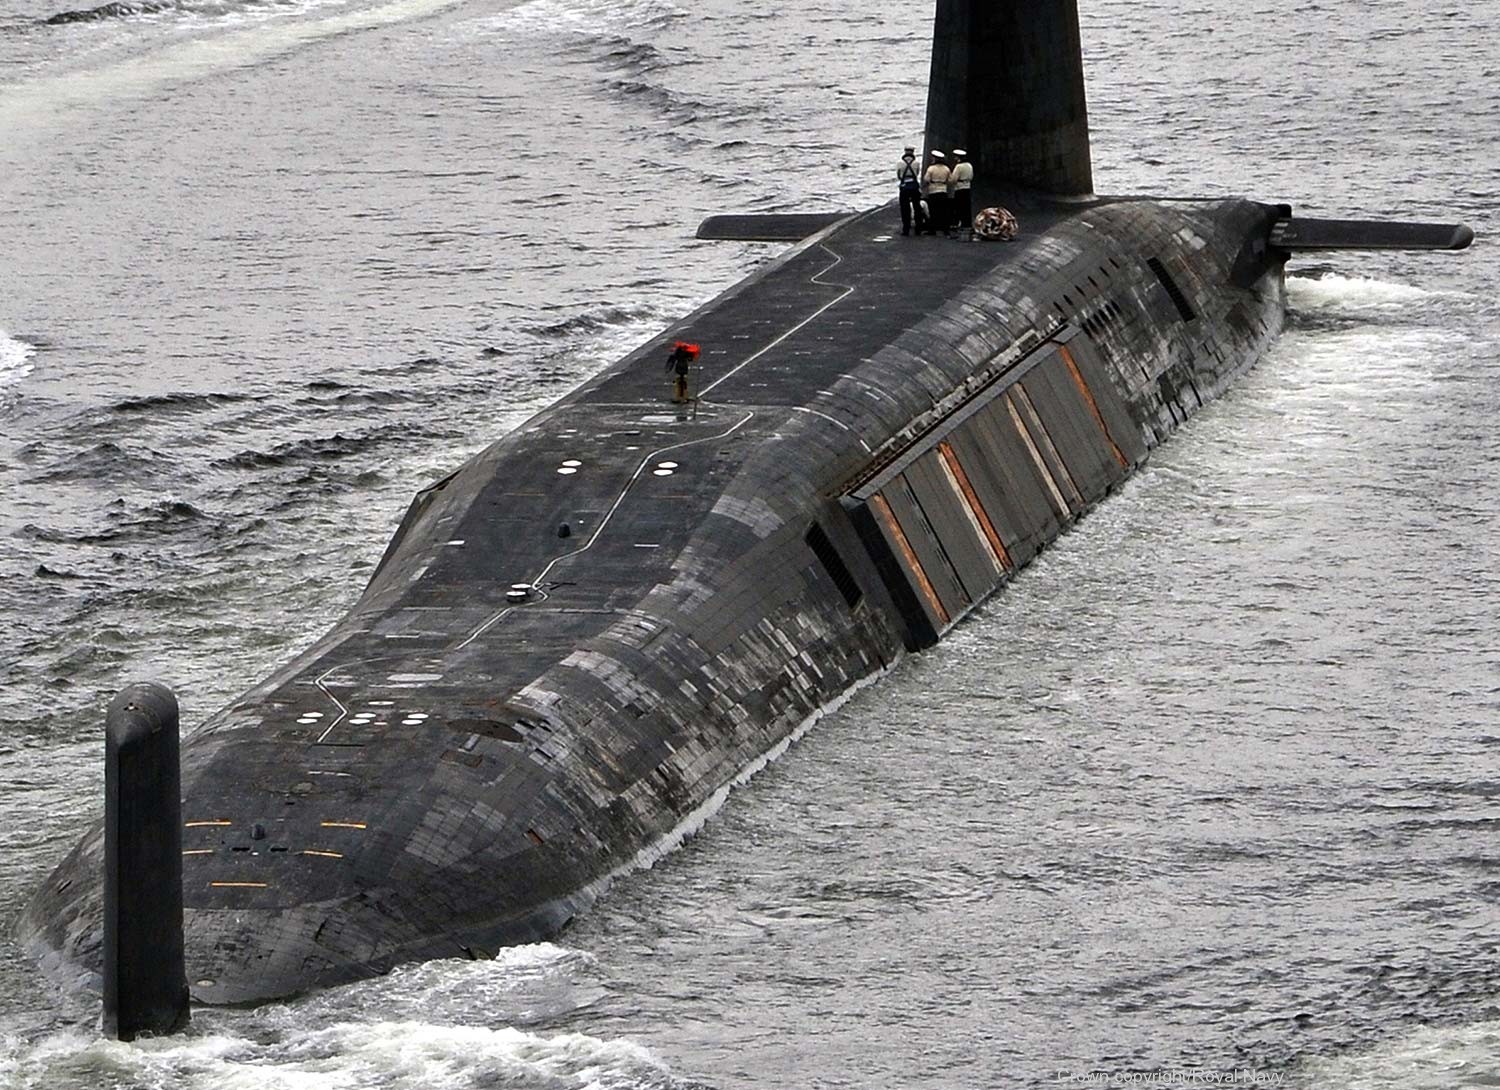 vanguard class ballistic missile submarine ssbn nuclear trident slbm royal navy 17c